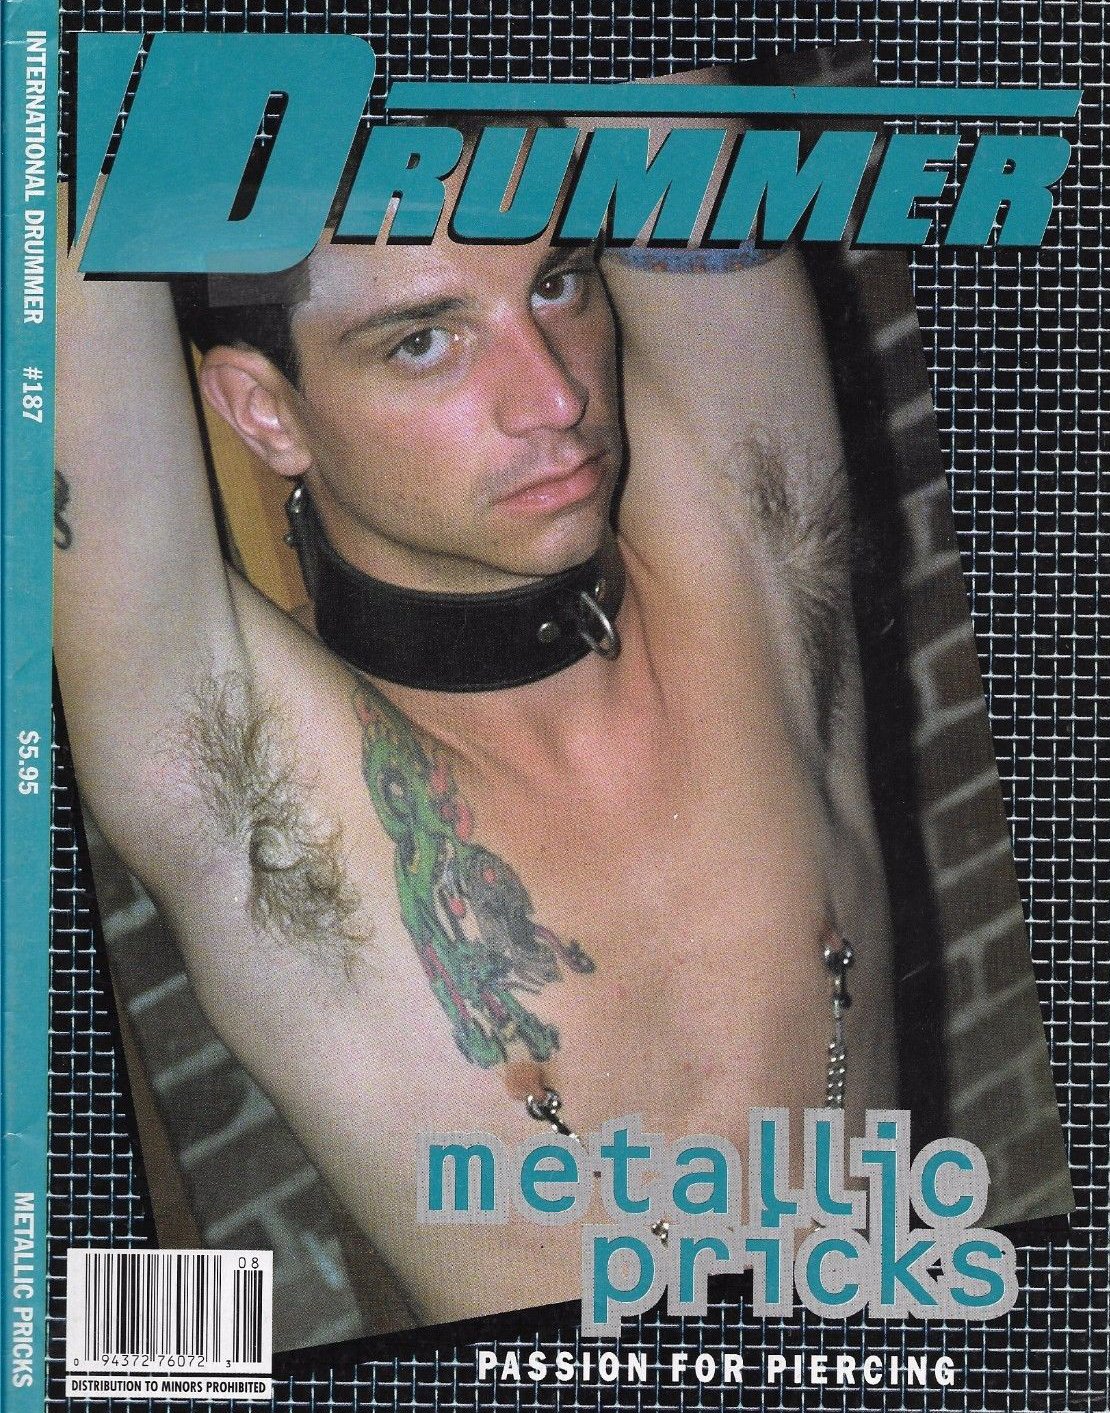 Drummer # 187 magazine reviews